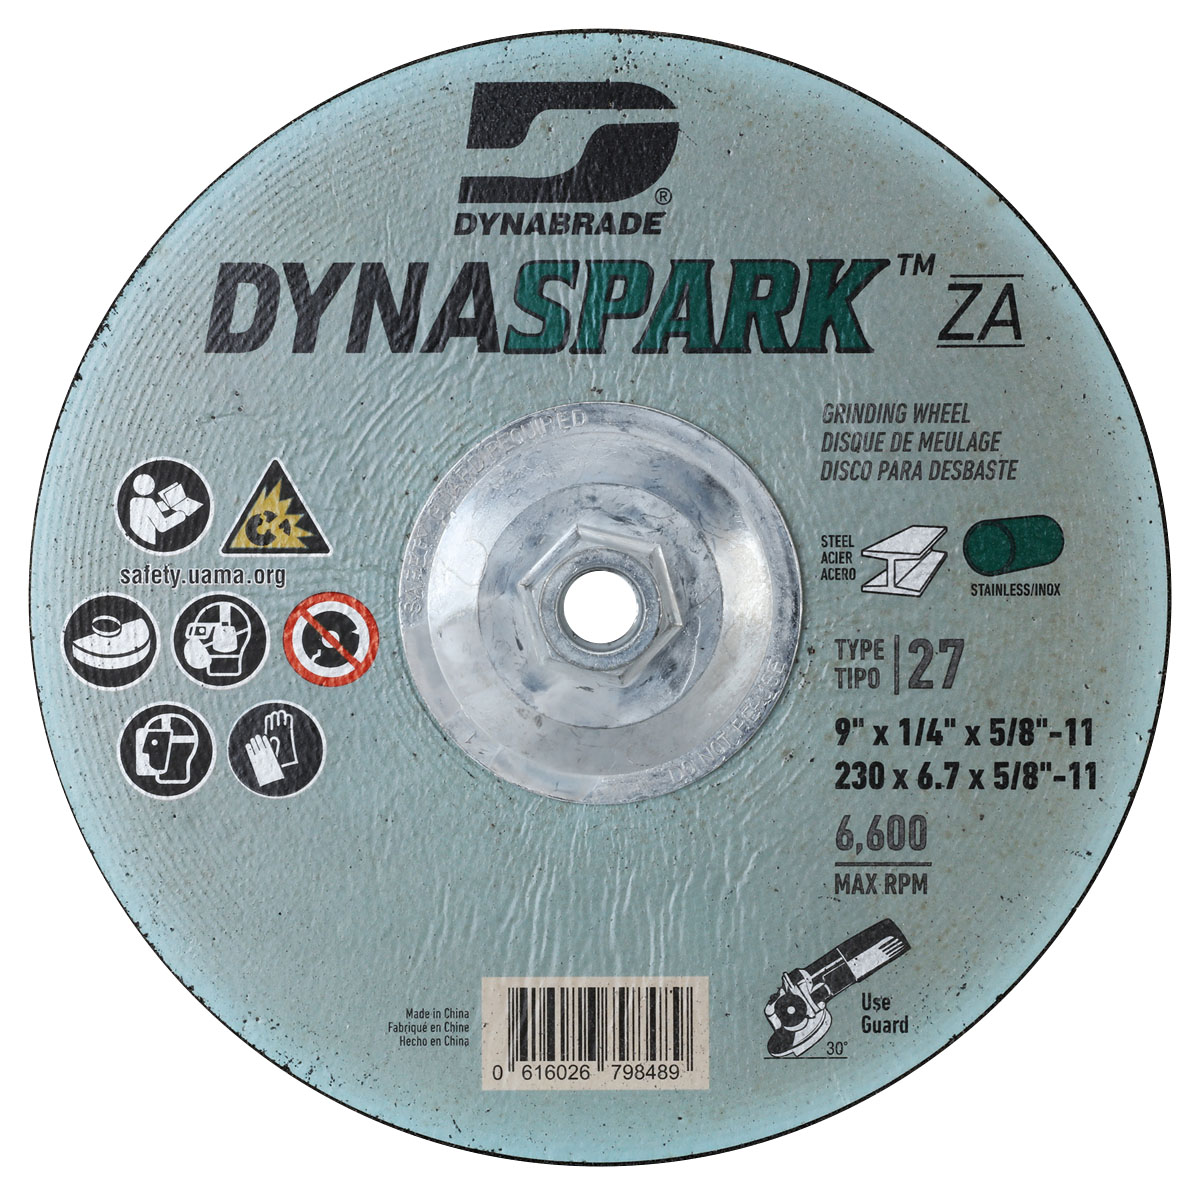 DynaSpark ZA 9" x 1/4" x 5/8"-11 T27 Grinding Wheel